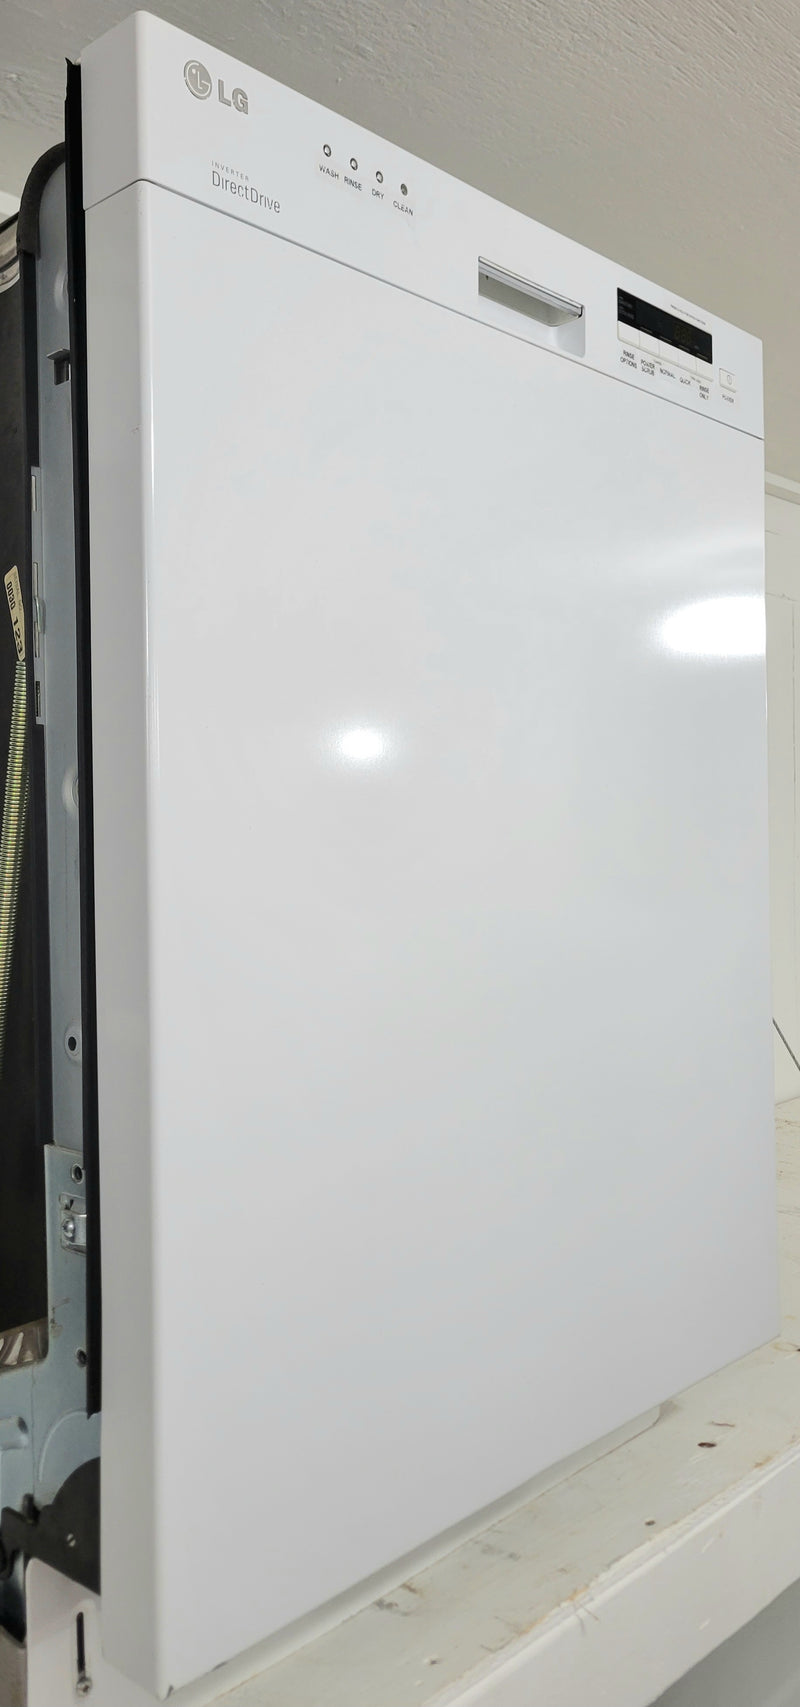 LG 24'' Wide White Dishwasher, Free 60 Day Warranty